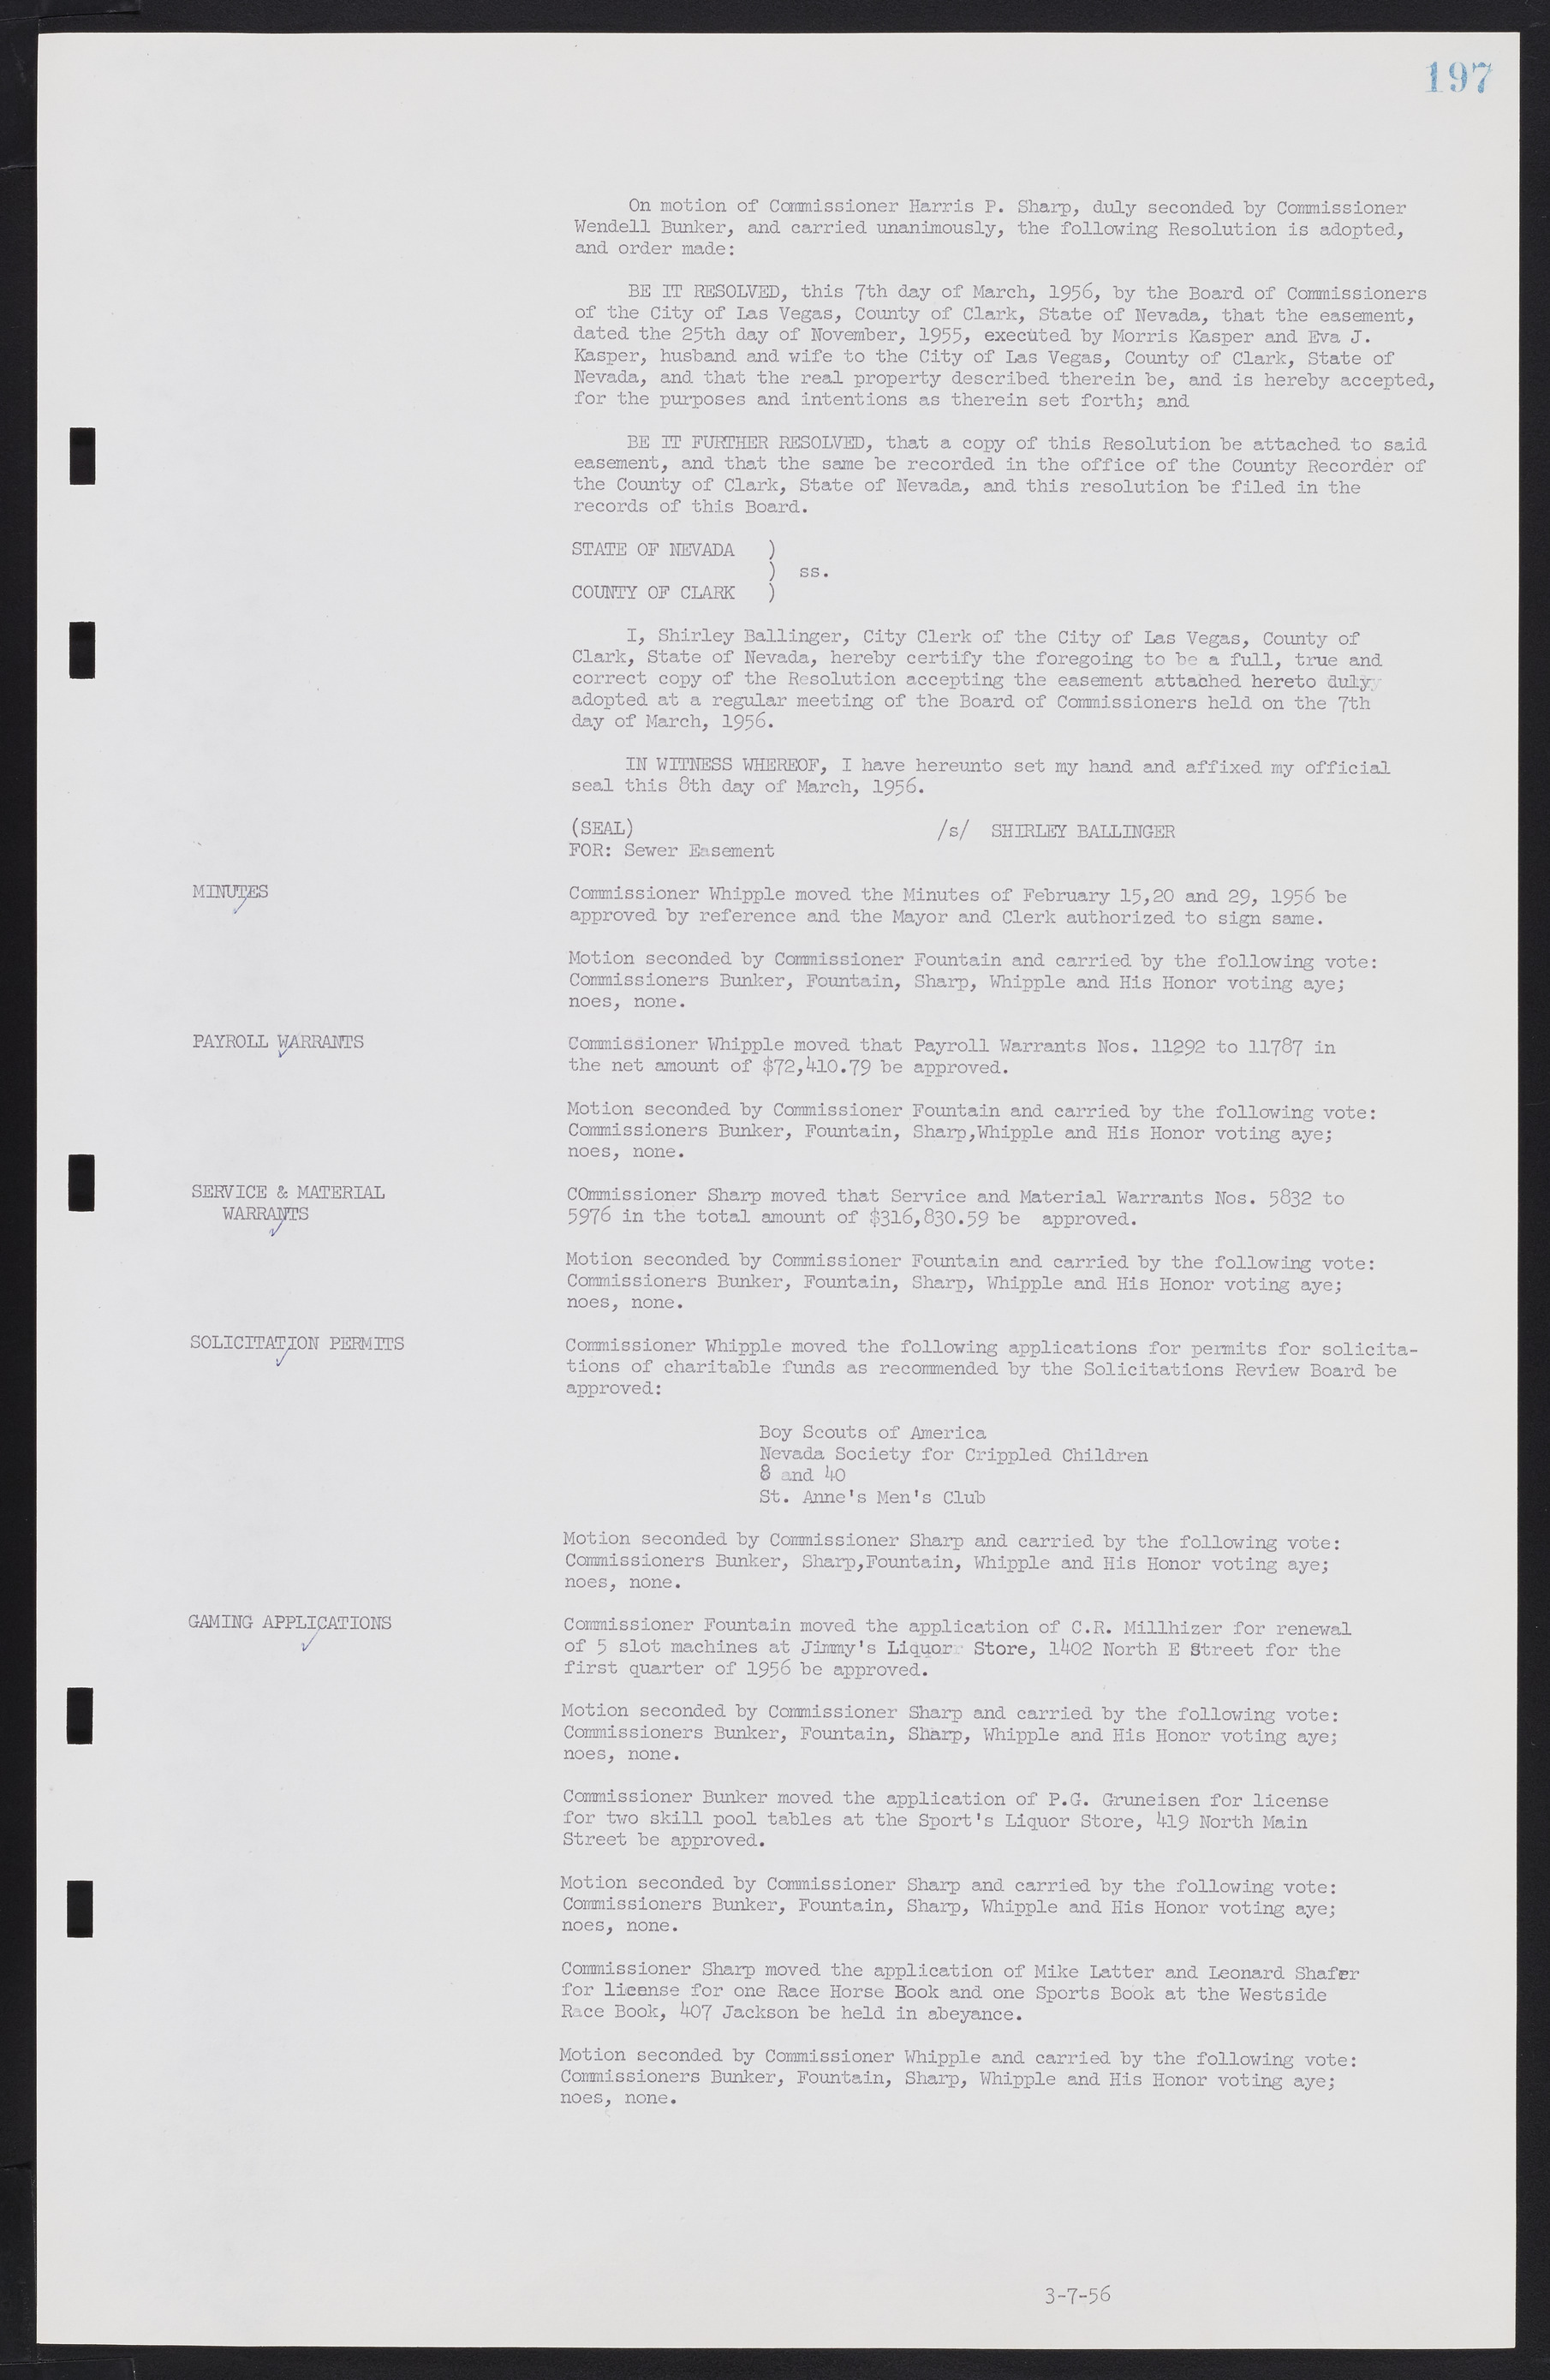 Las Vegas City Commission Minutes, September 21, 1955 to November 20, 1957, lvc000010-213